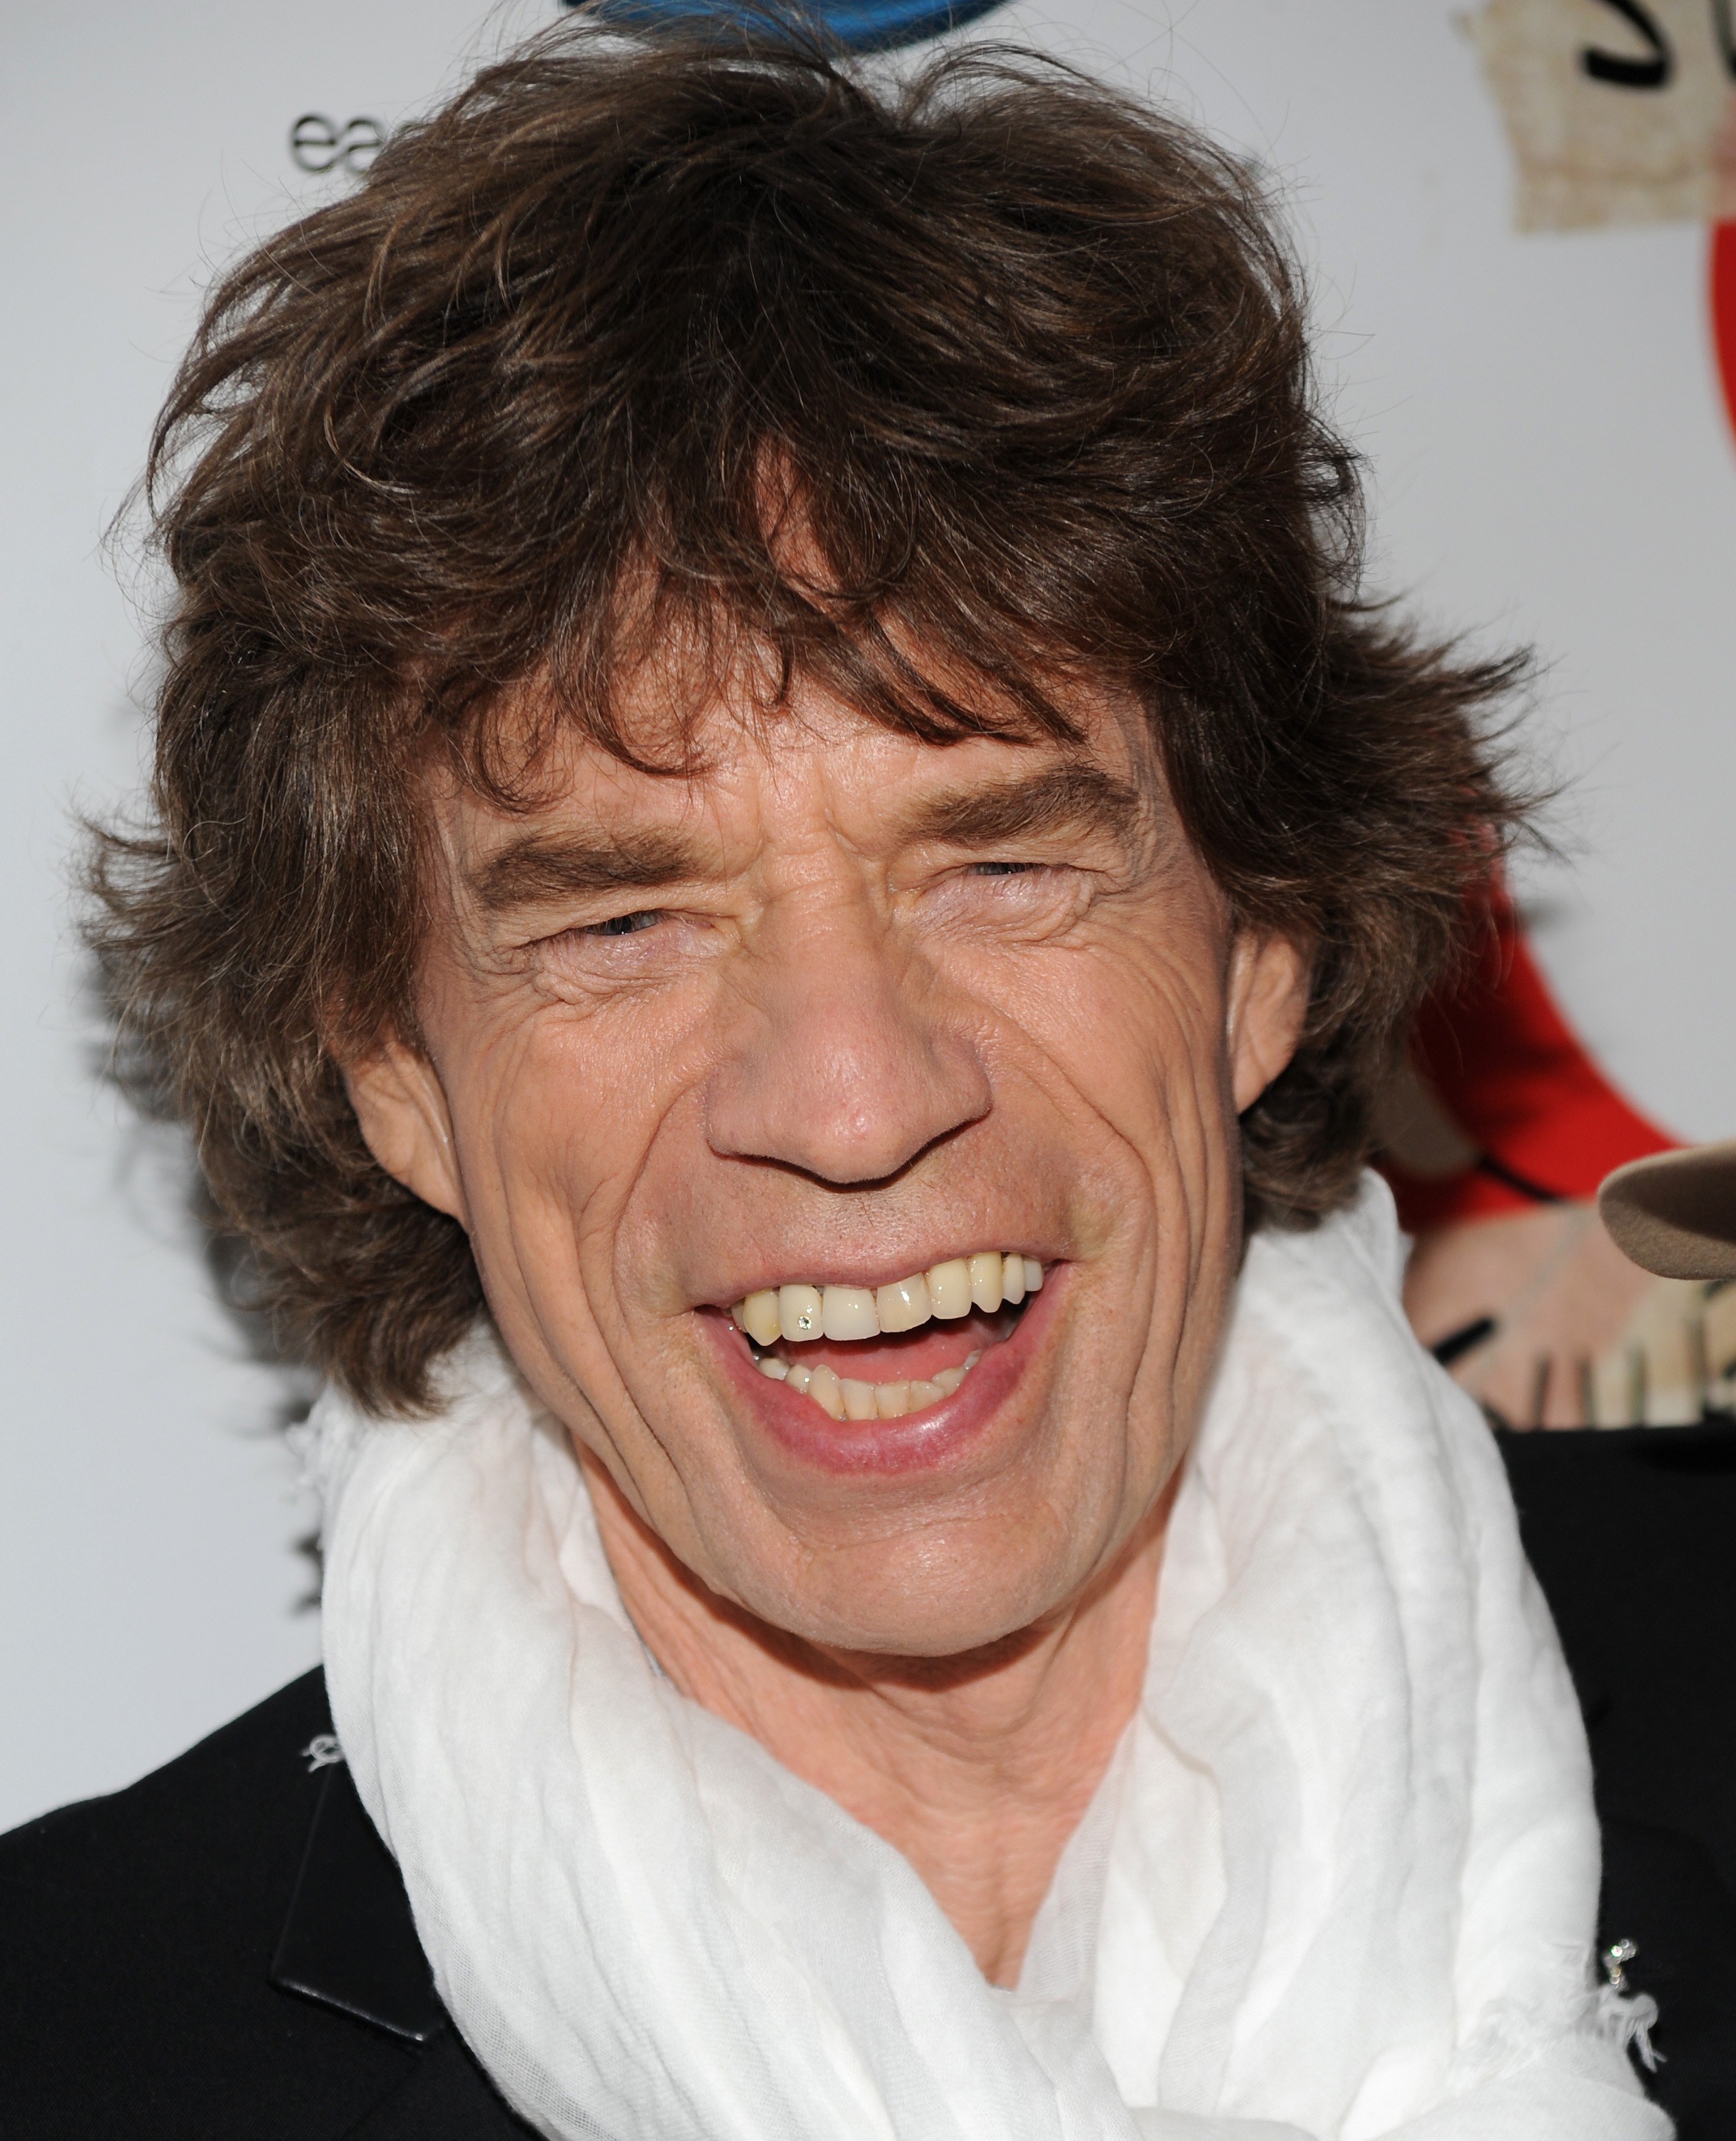 Mick Jagger, aktuell med film om livet back in the day.